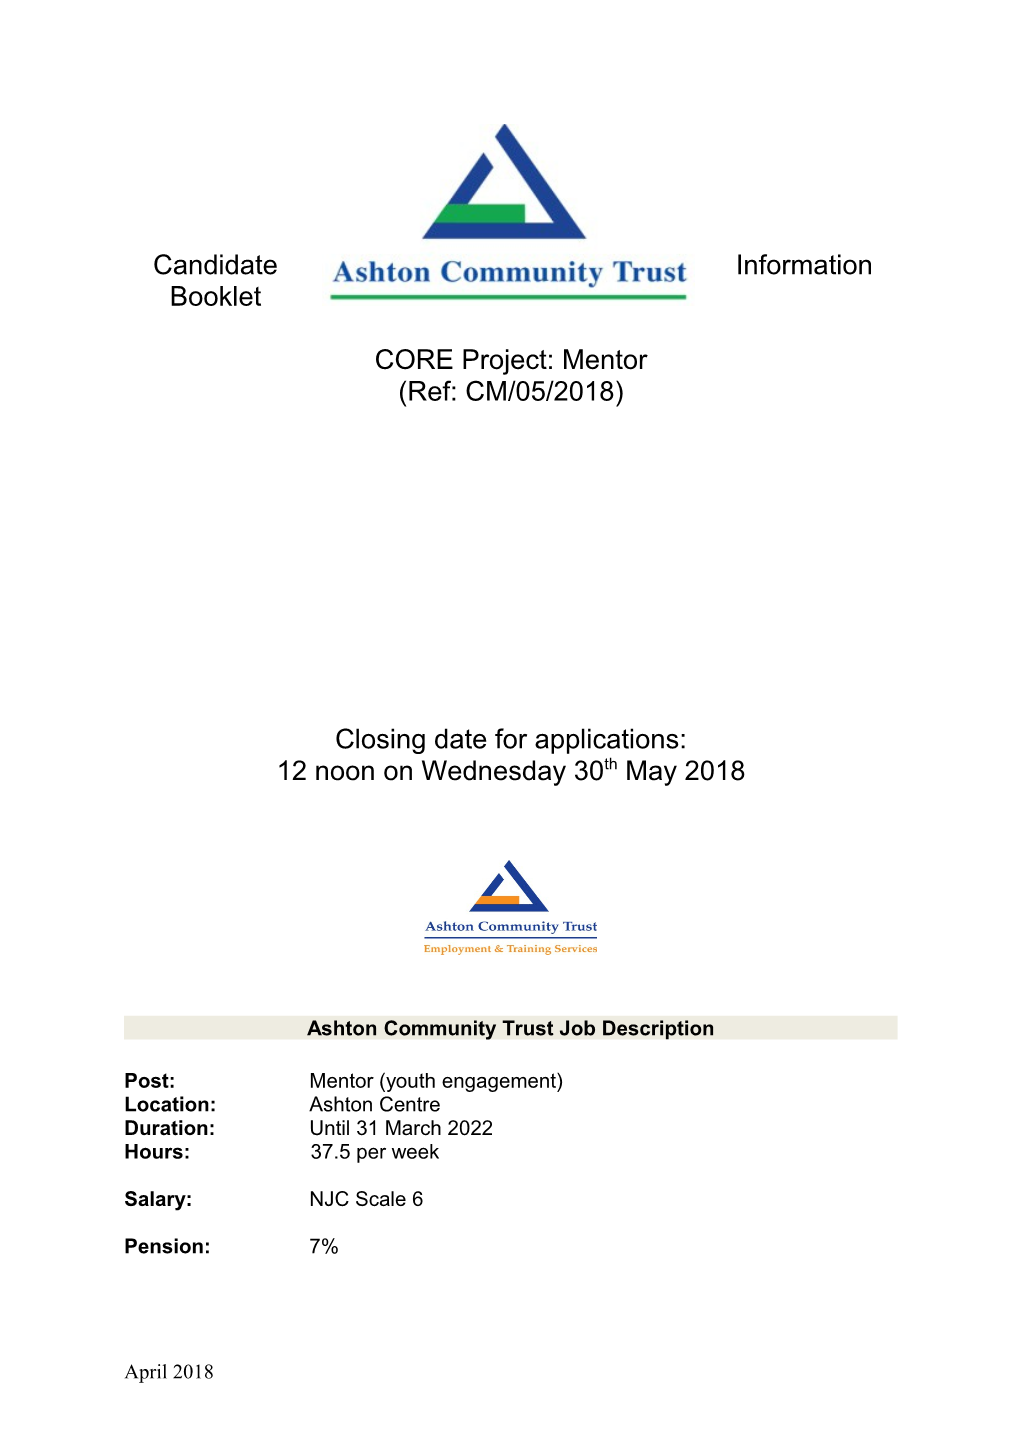 Ashton Community Trust Job Description